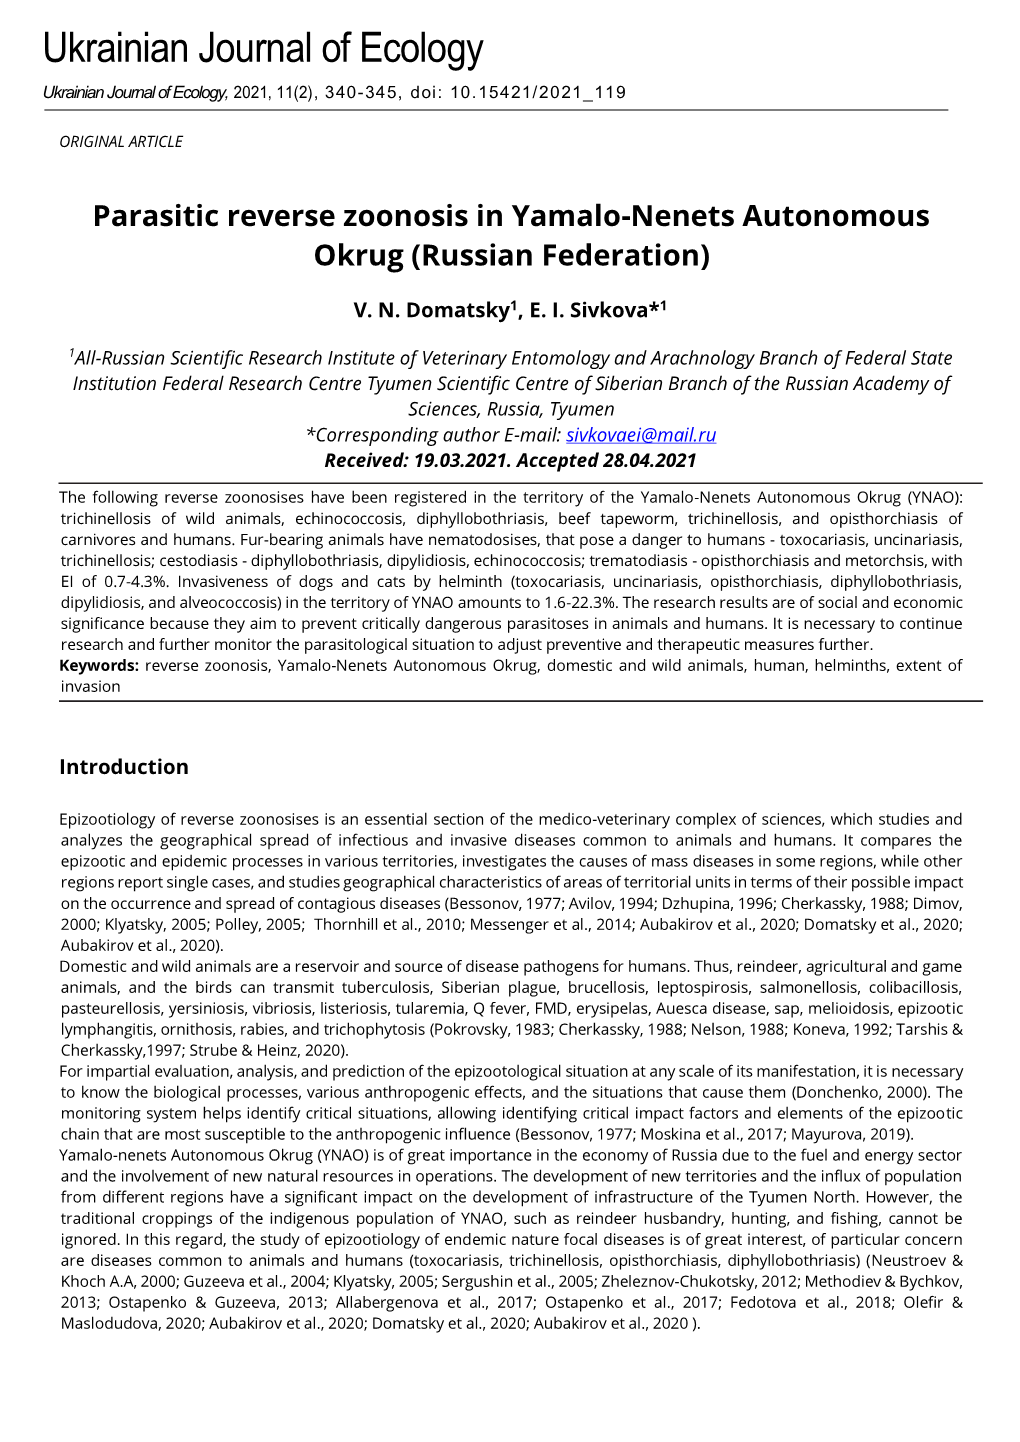 Parasitic Reverse Zoonosis in Yamalo-Nenets Autonomous Okrug (Russian Federation)